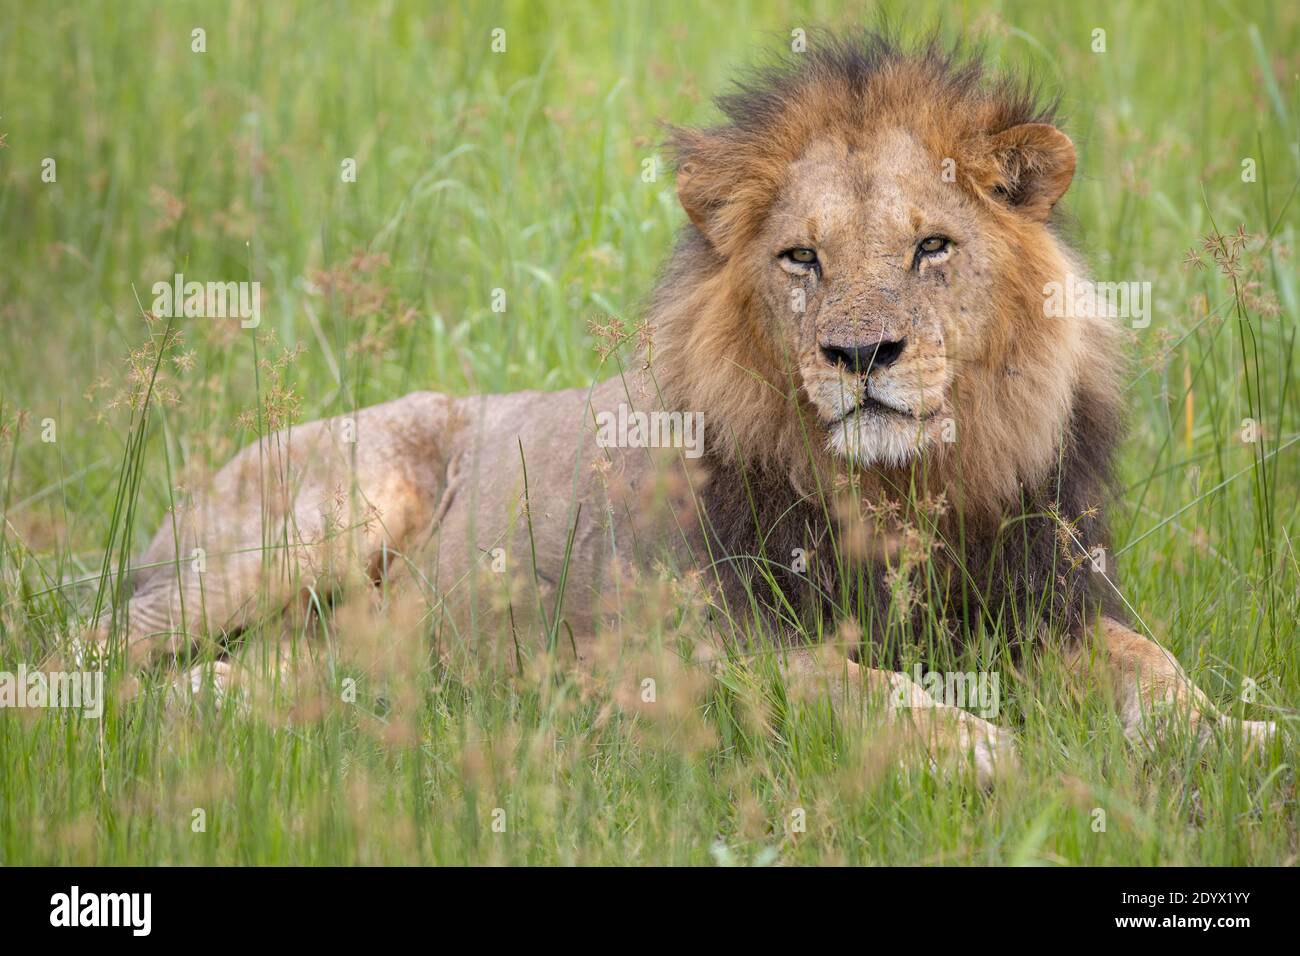 African Lion (Panthera leo). Reclining adult male, lying amongst grassland vegetation. Green colour of the grass indicative of the wet season.Botswana Stock Photo